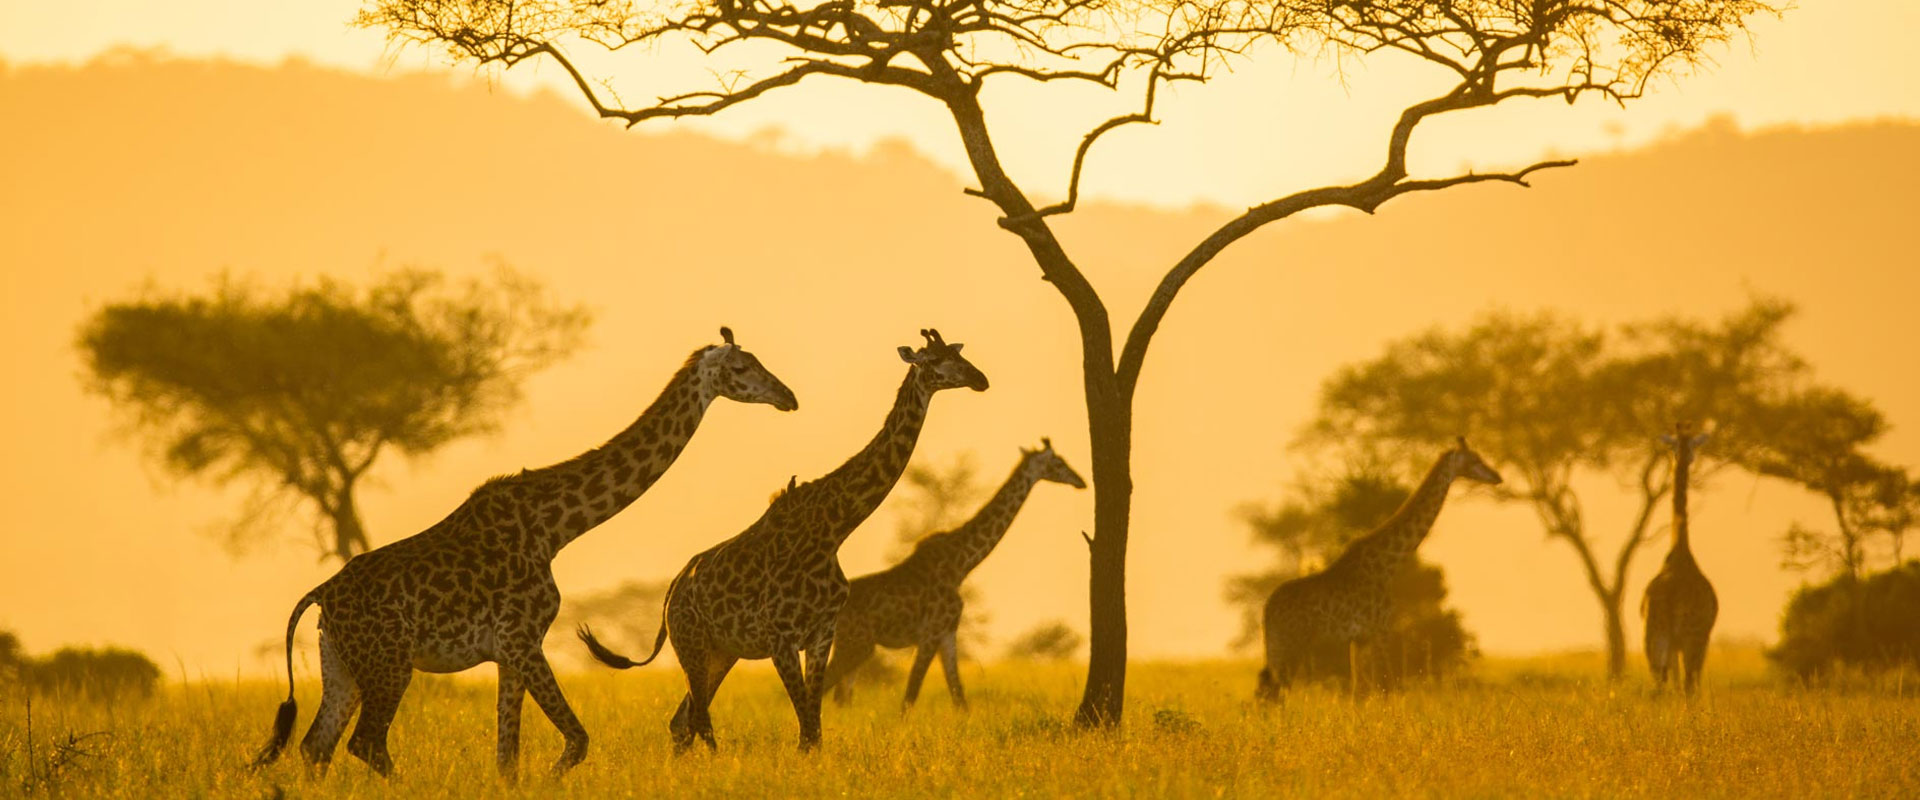 Tanzania Classic Safari